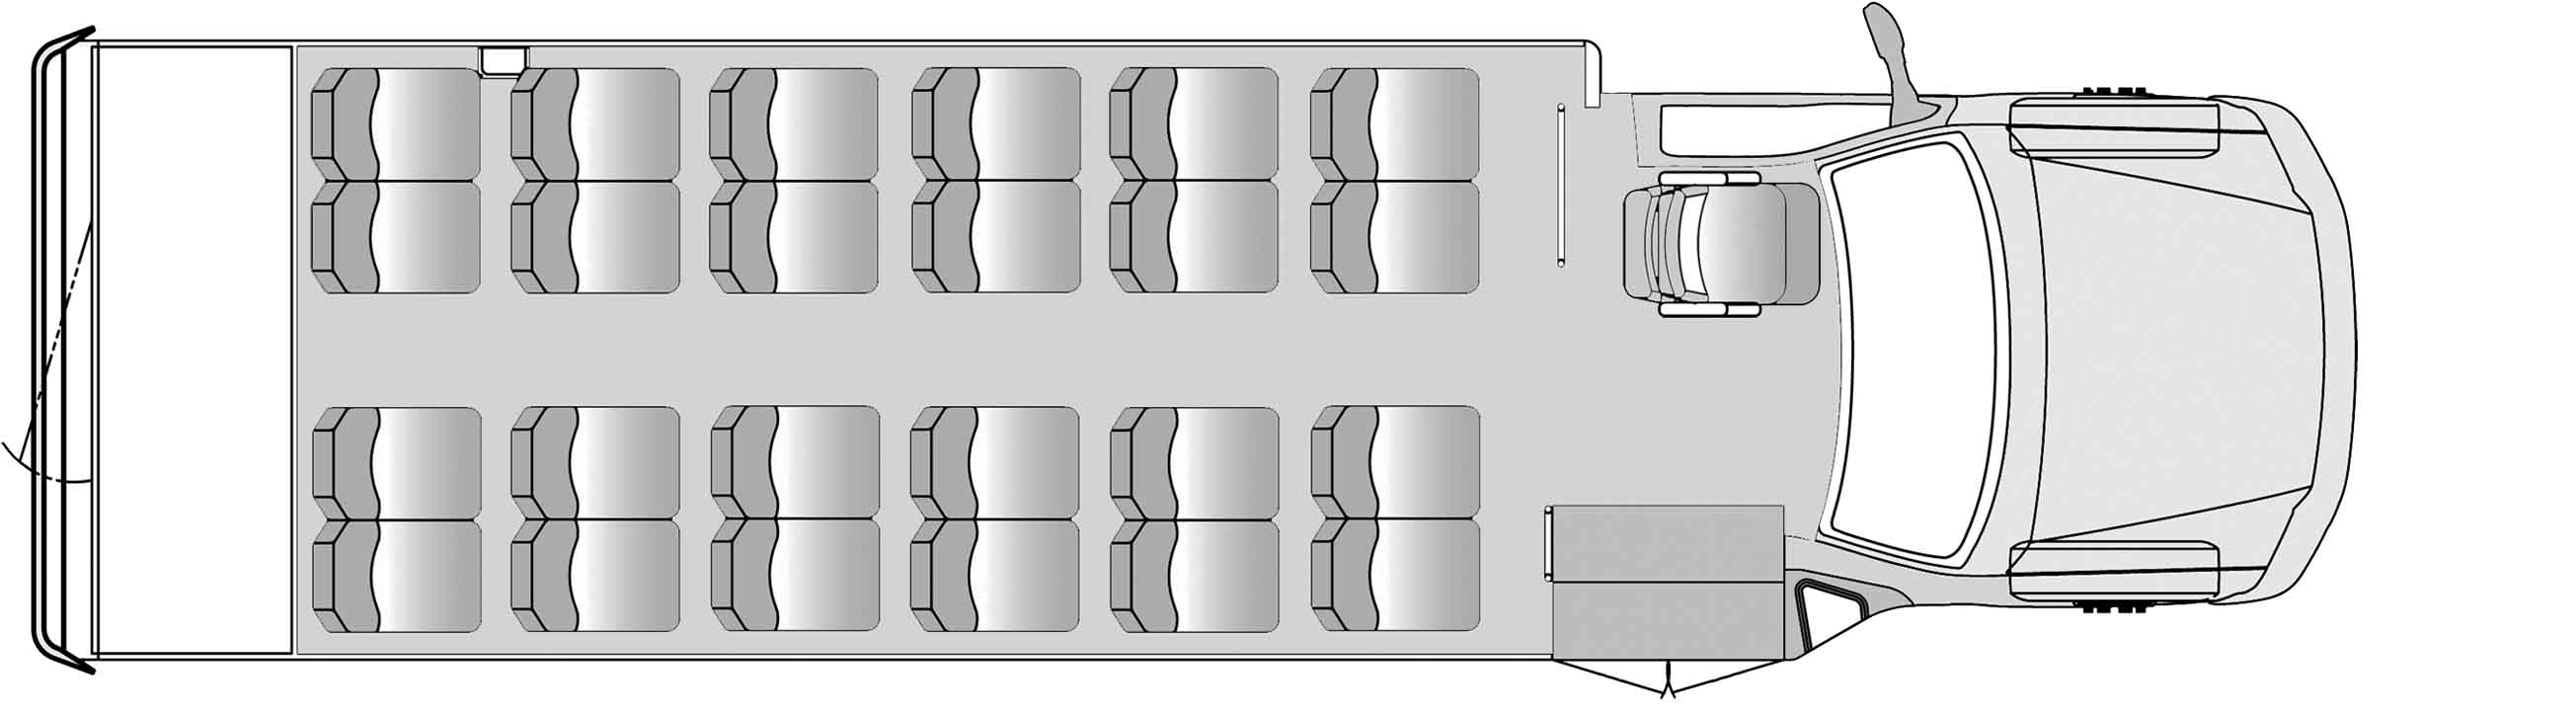 24 Passenger with Rear Luggage Plus Driver Floorplan Image